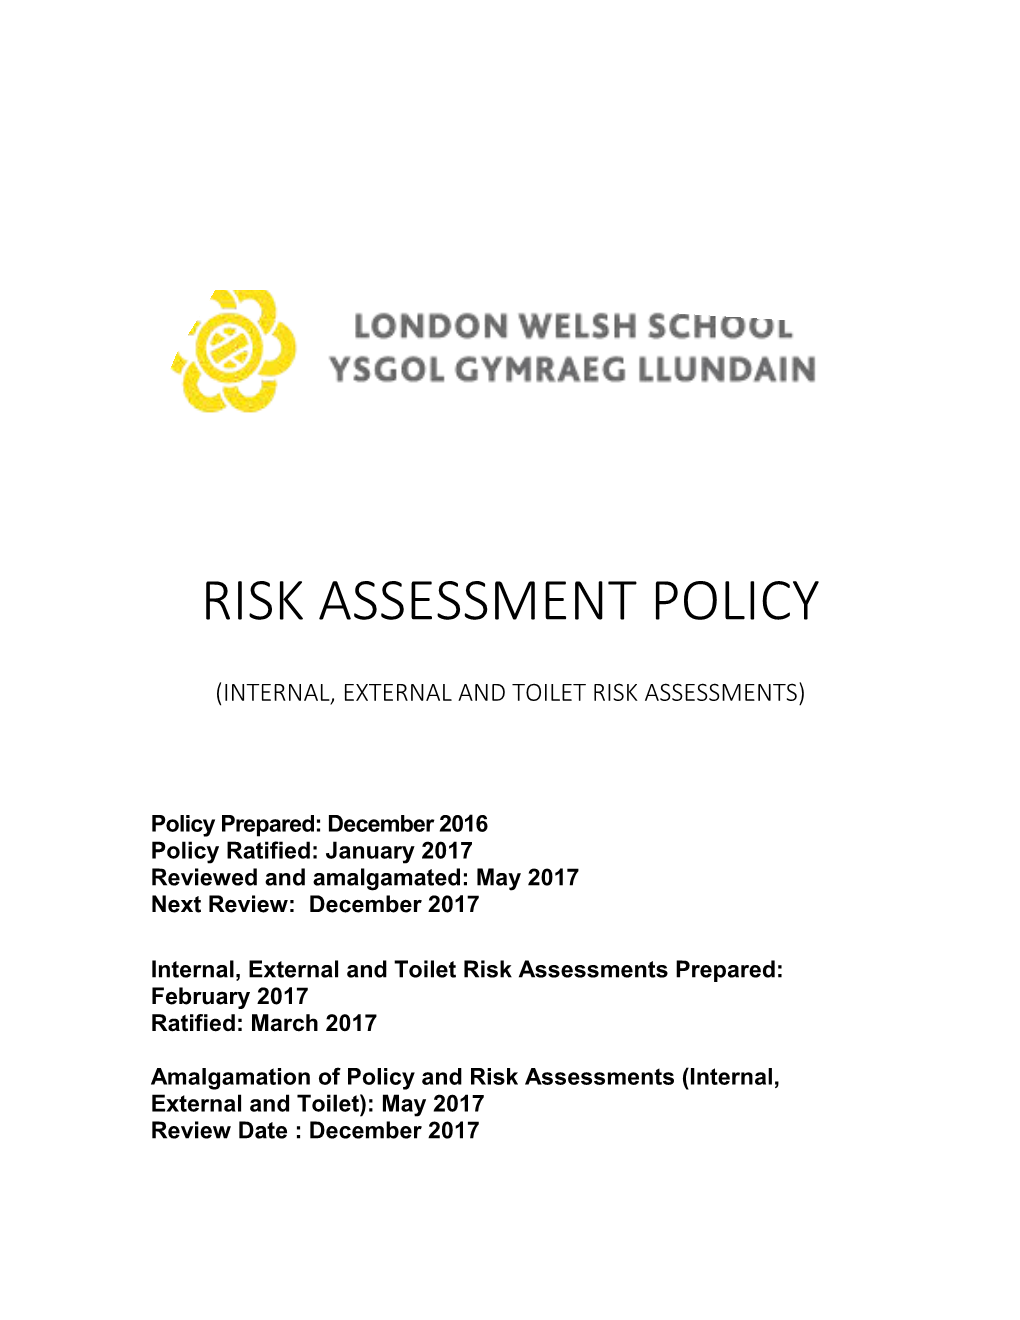 Internal, External and Toilet Risk Assessments